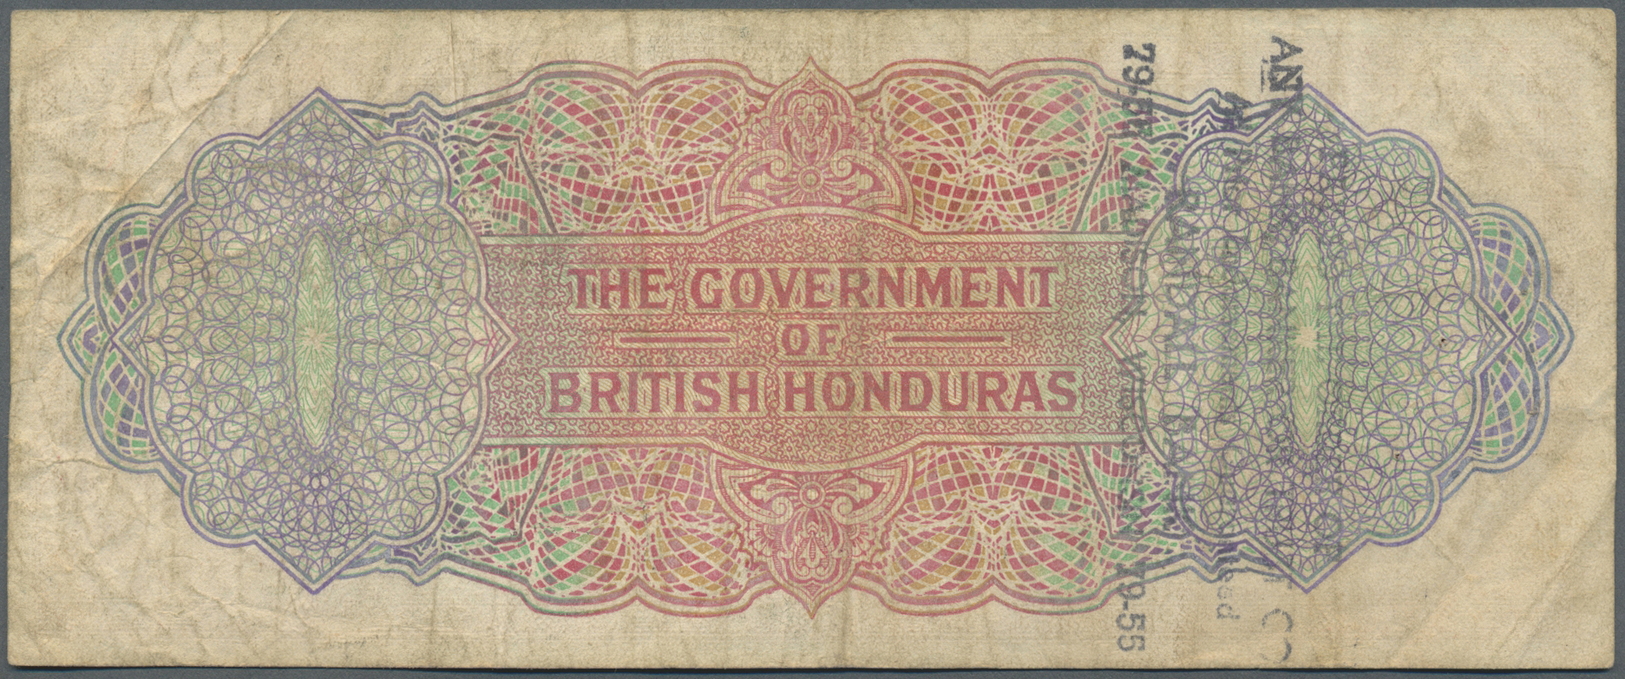 00345 British Honduras: 5 Dollars 1965 P. 30b, Used With Folds And Creases, Stamped On Back, No Tears, 2 Pinholes, Condi - Honduras